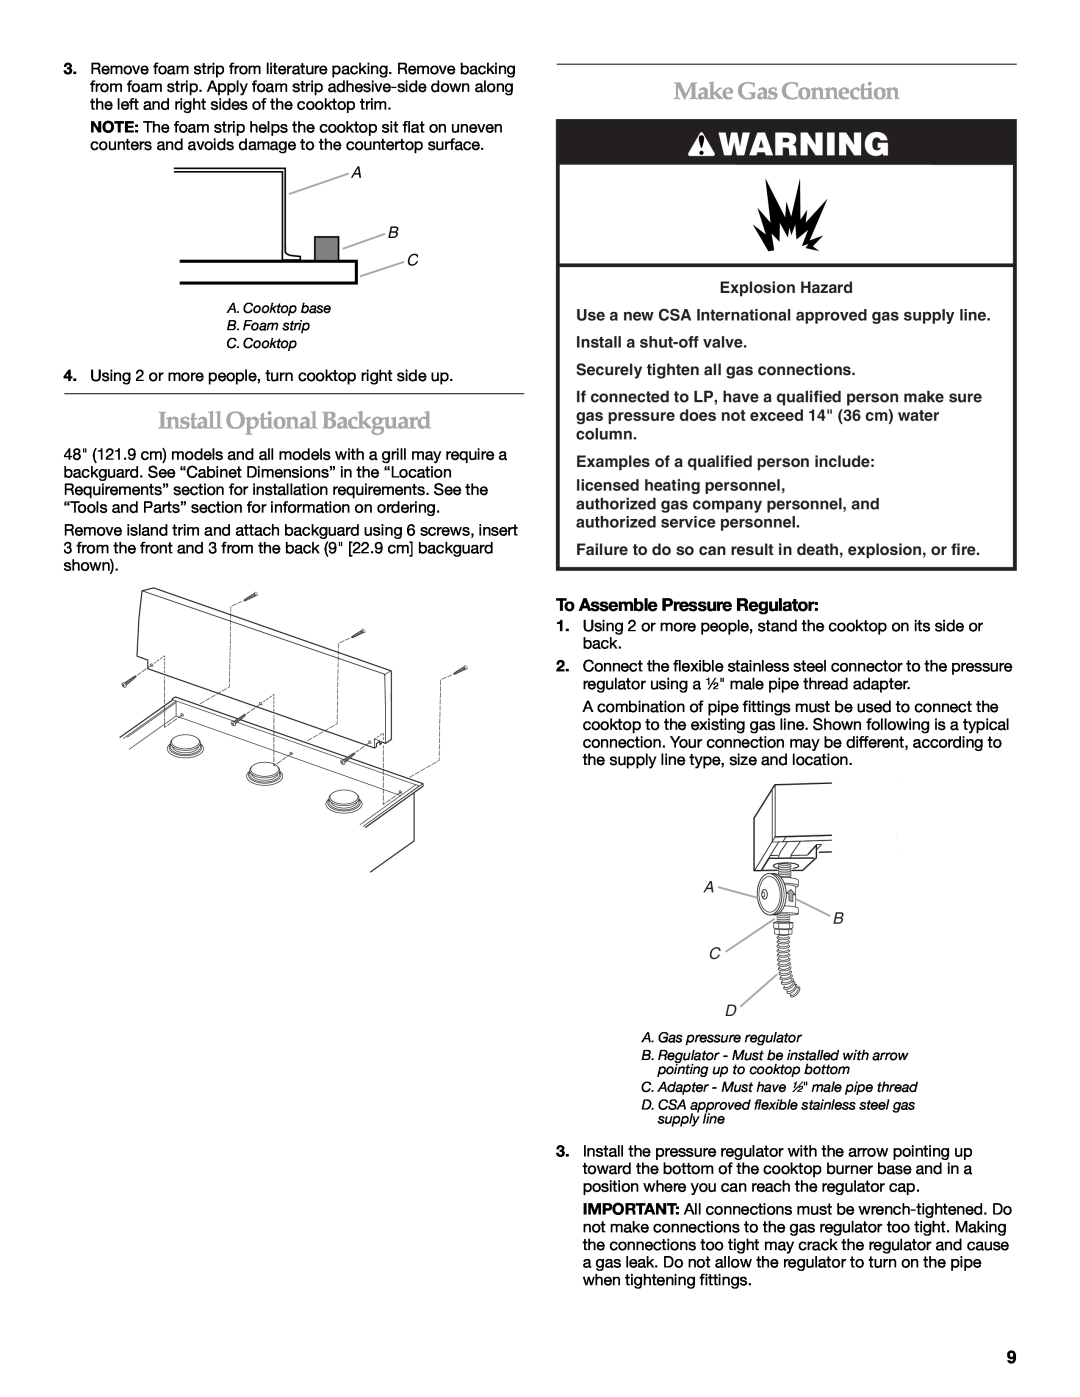 KitchenAid W10271686C InstallOptional Backguard, Make Gas Connection, To Assemble Pressure Regulator, A B C D 